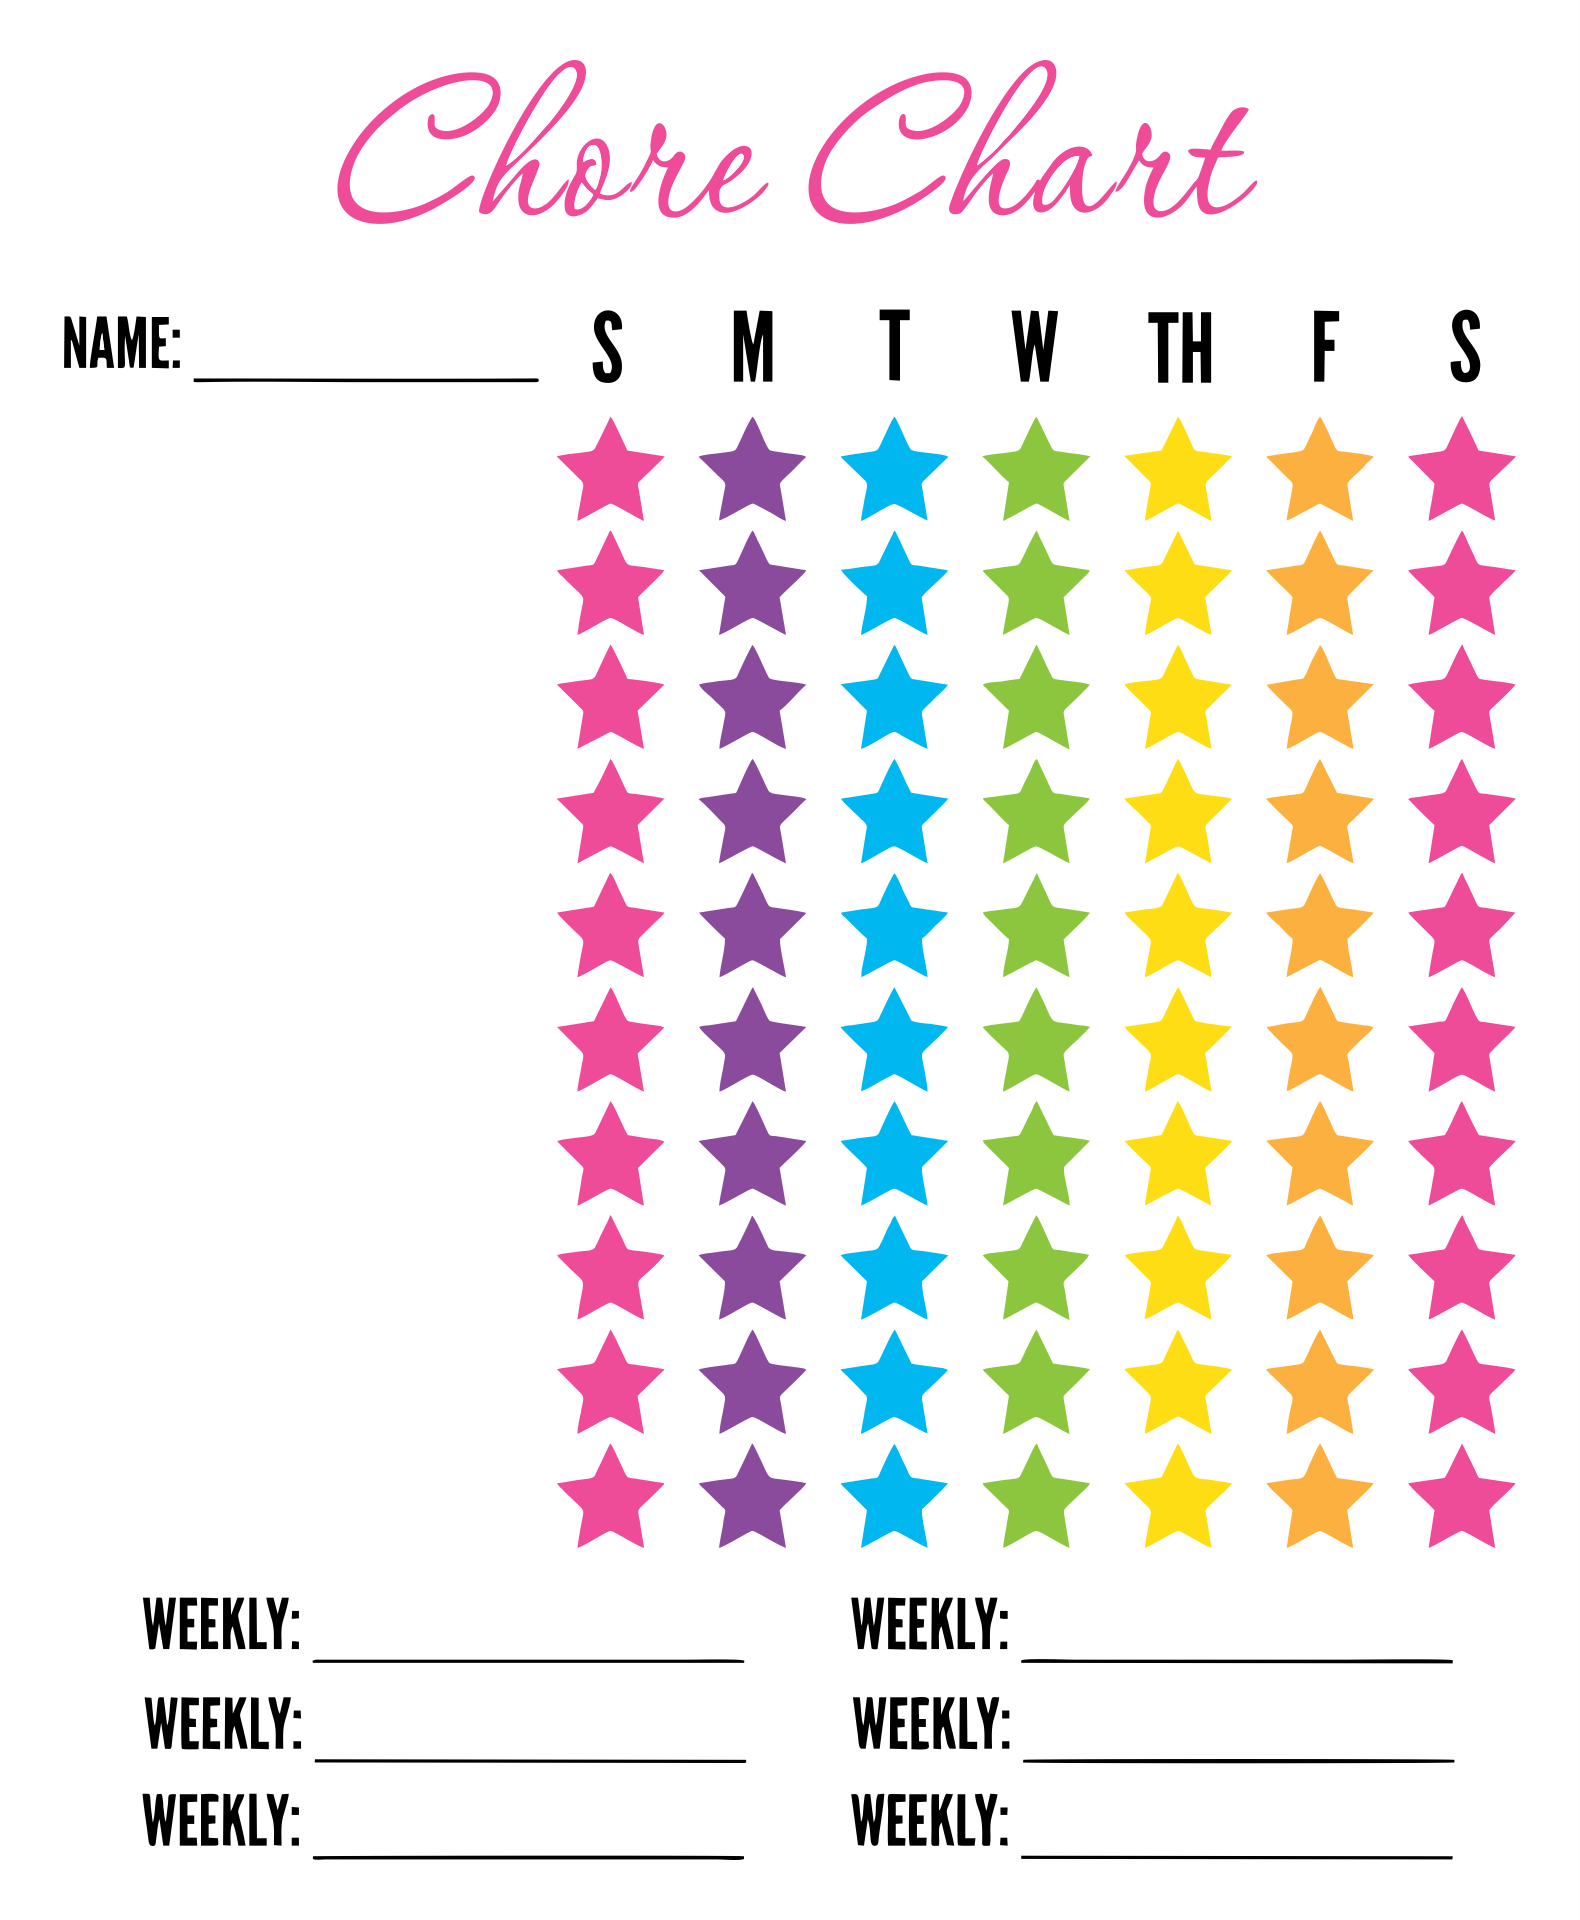 Printable Chore Chart Templates